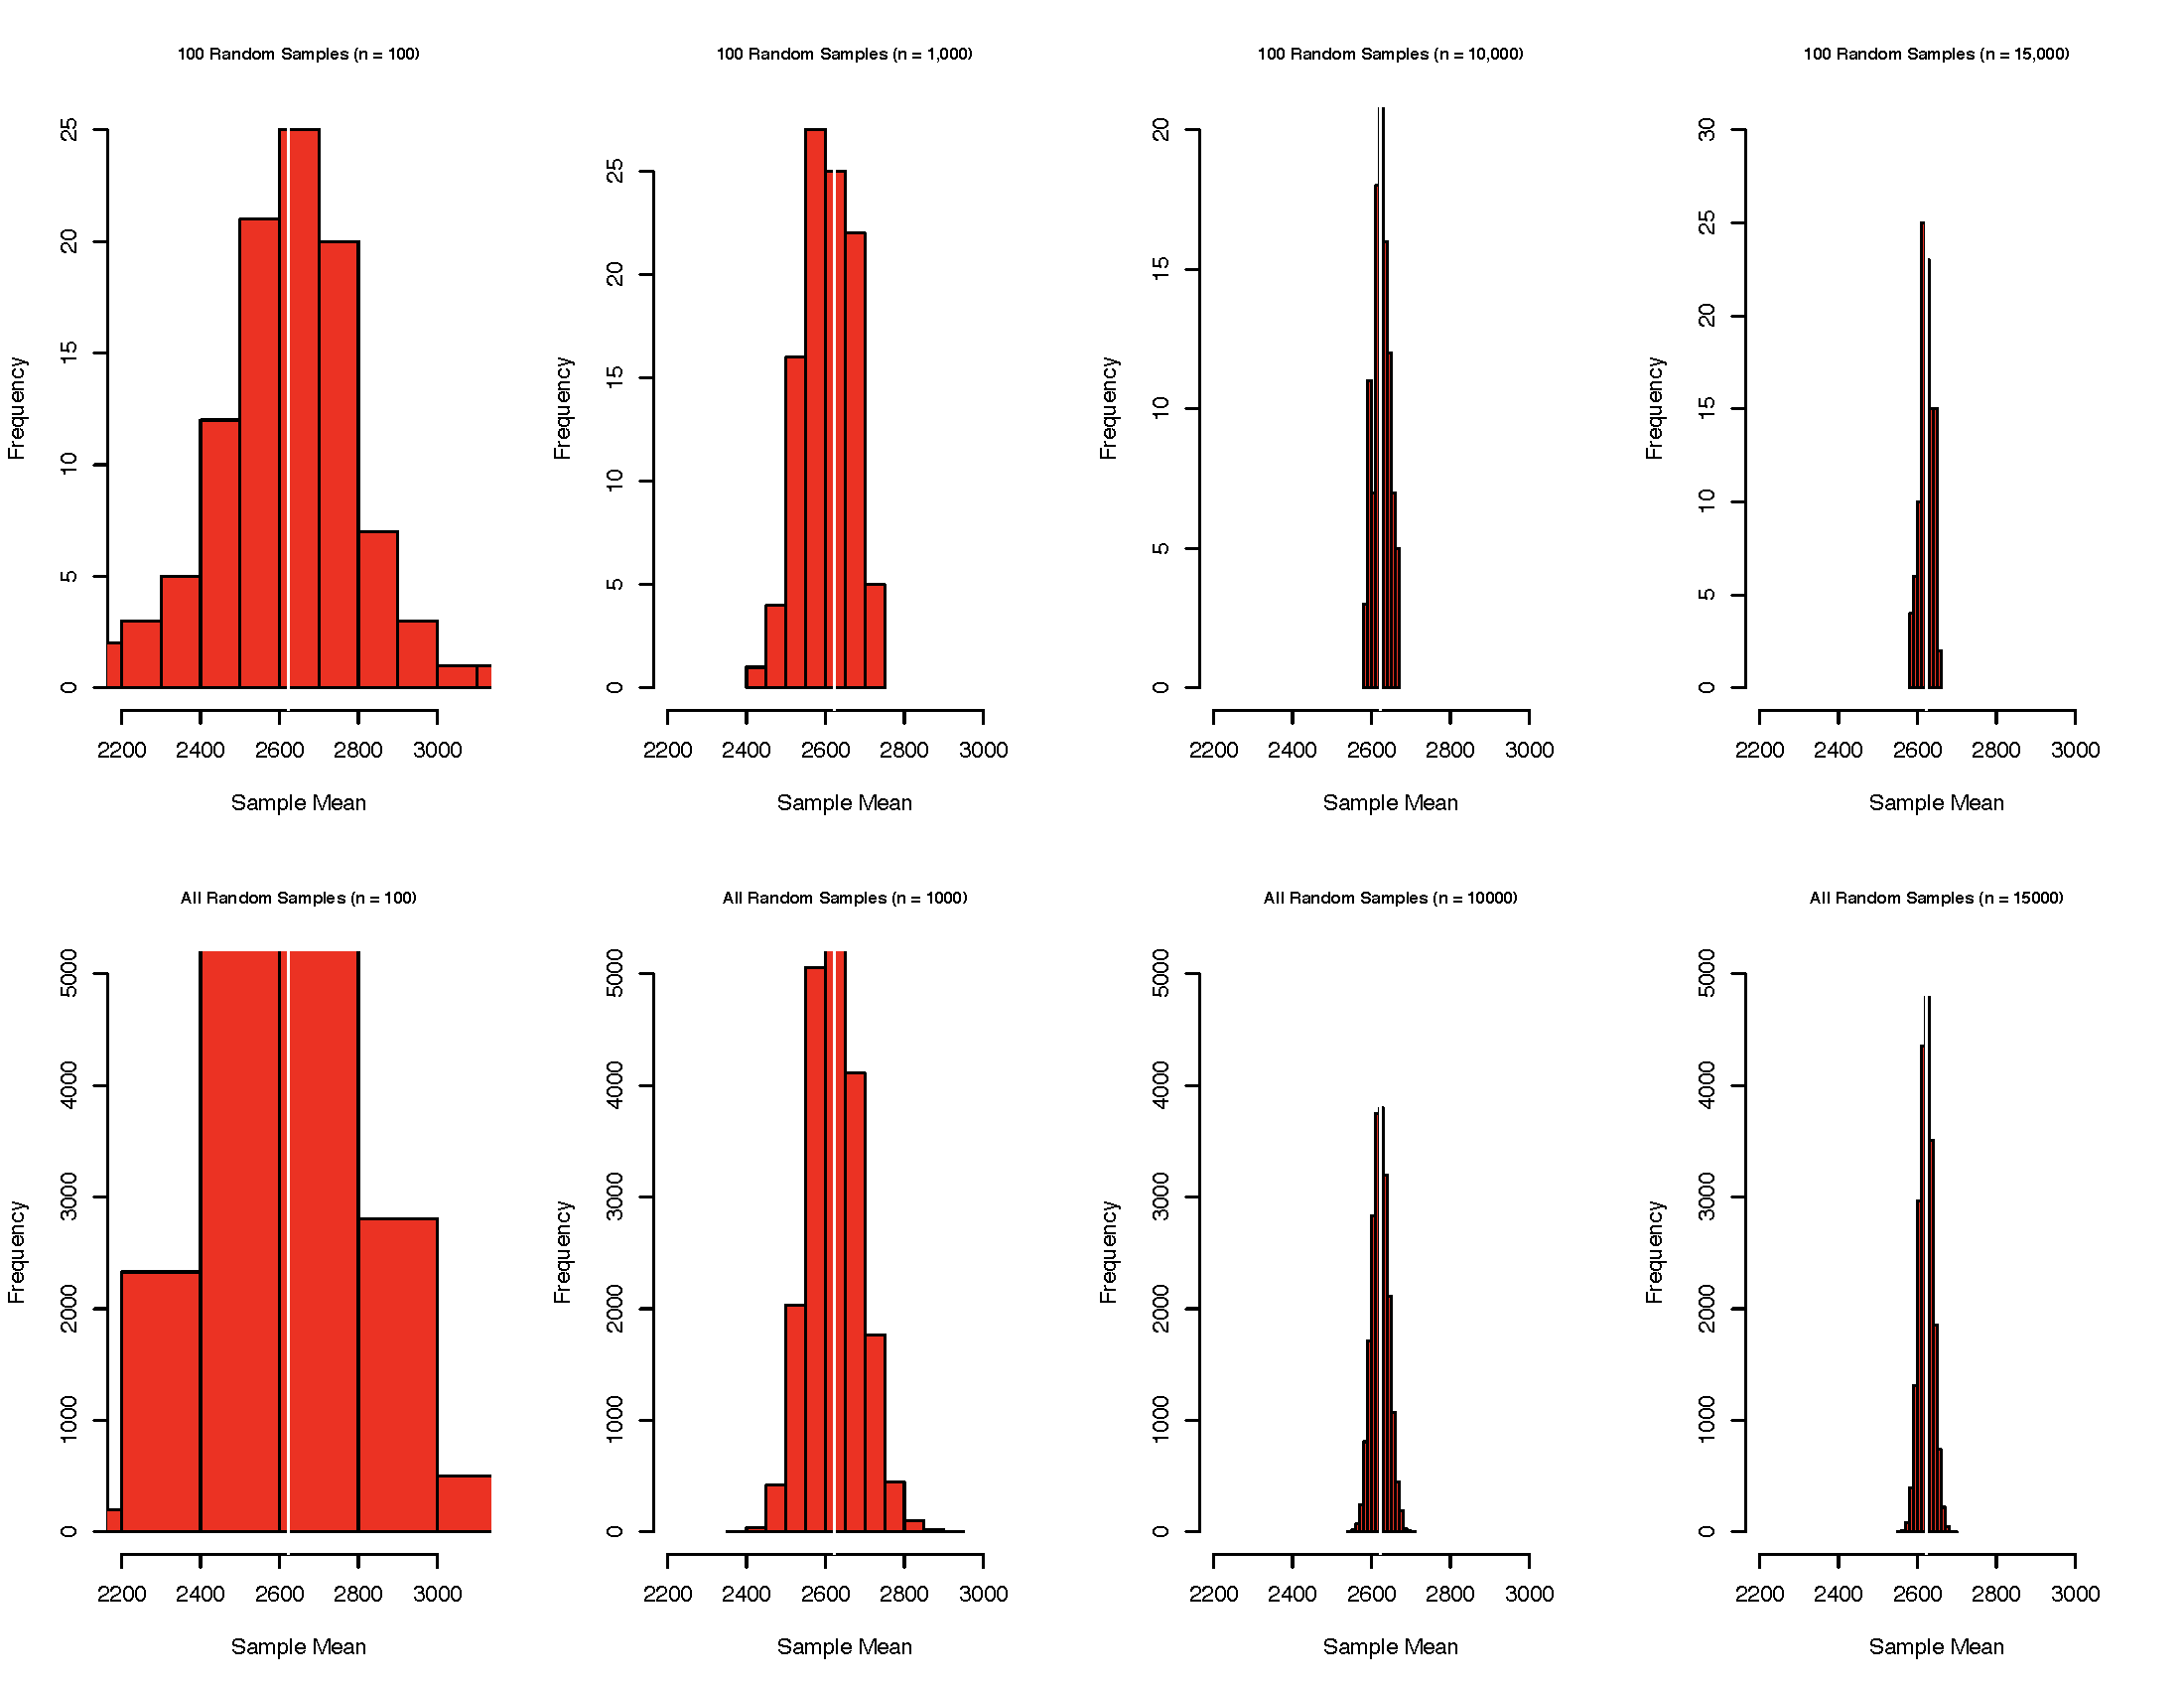 Sampling Distributions of Human Gene Lengths